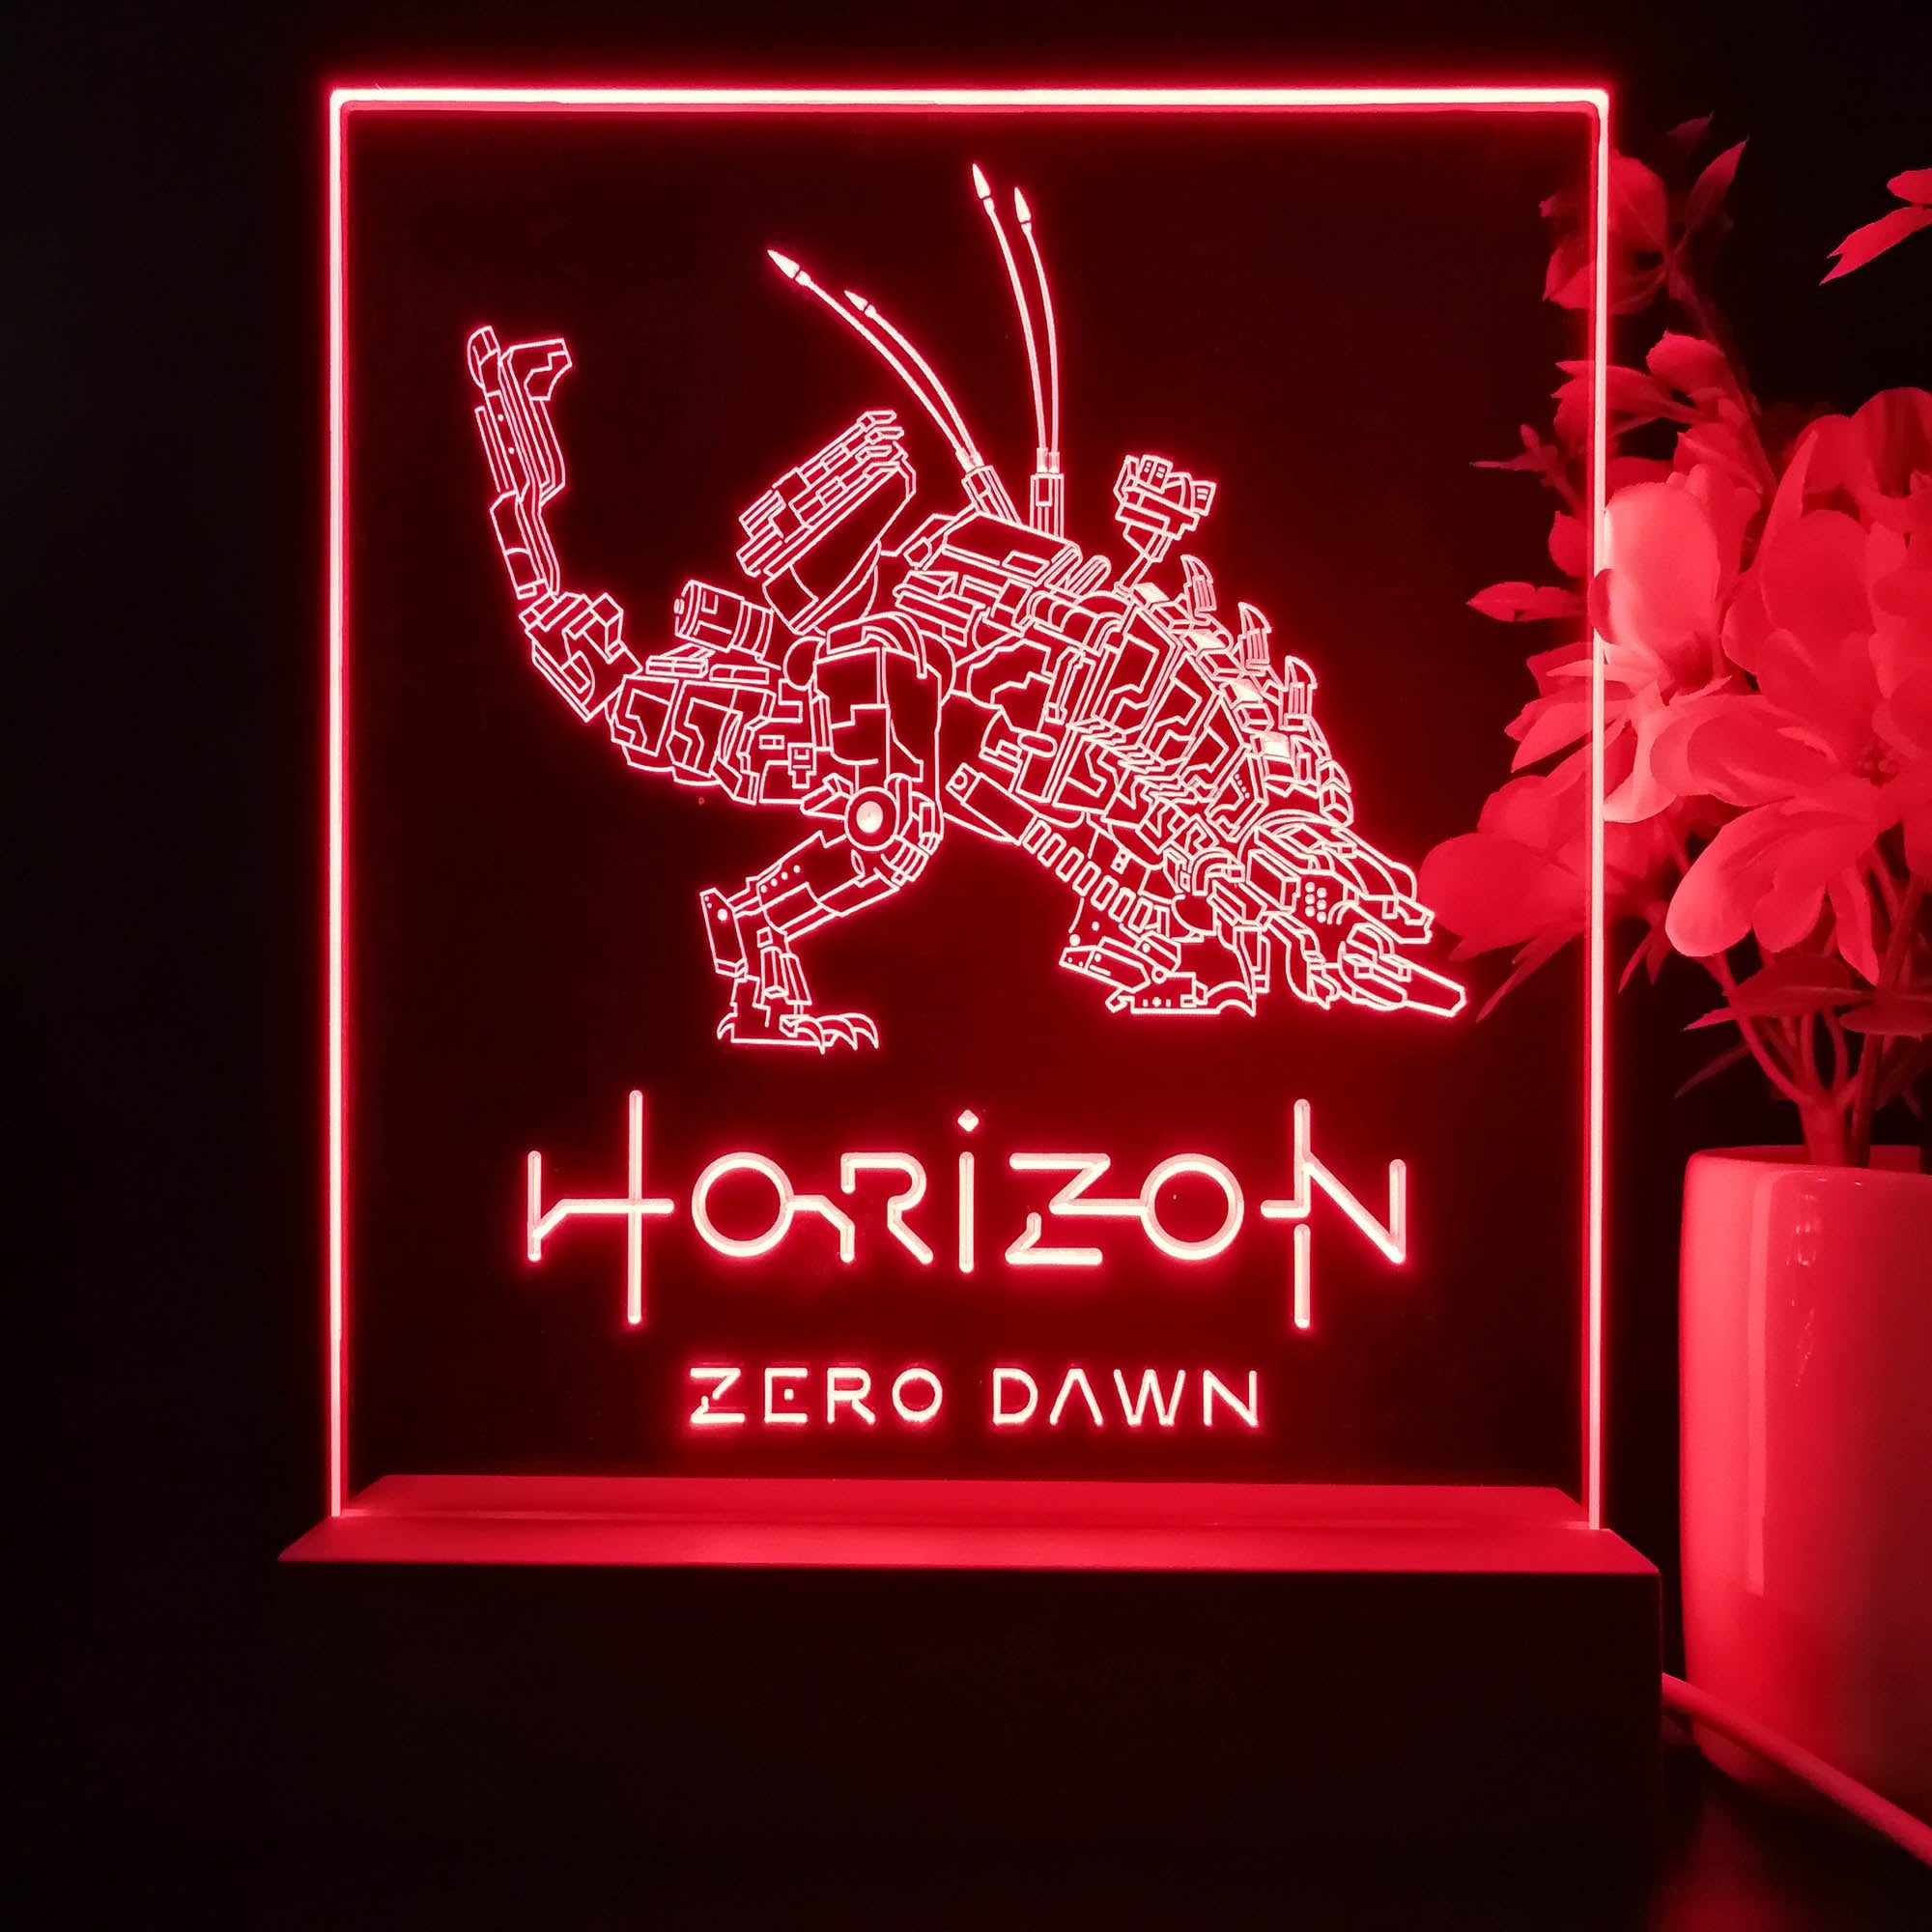 Horizon Zero Dawn Thunderjaws Game Room LED Sign Lamp Display